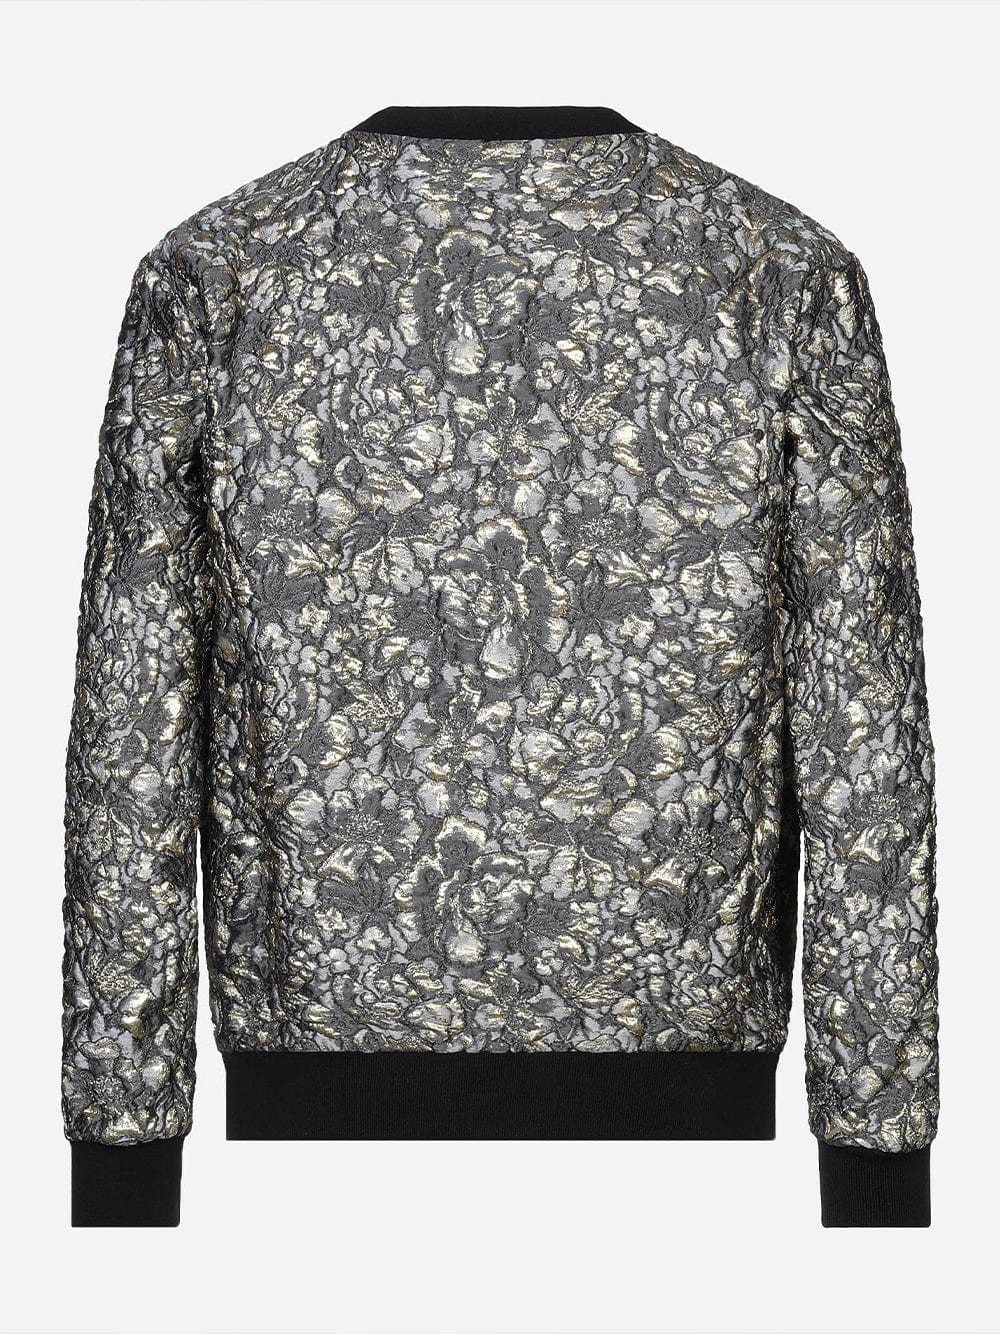 Dolce & Gabbana Jacquard Samba-Embellished Sweatshirt